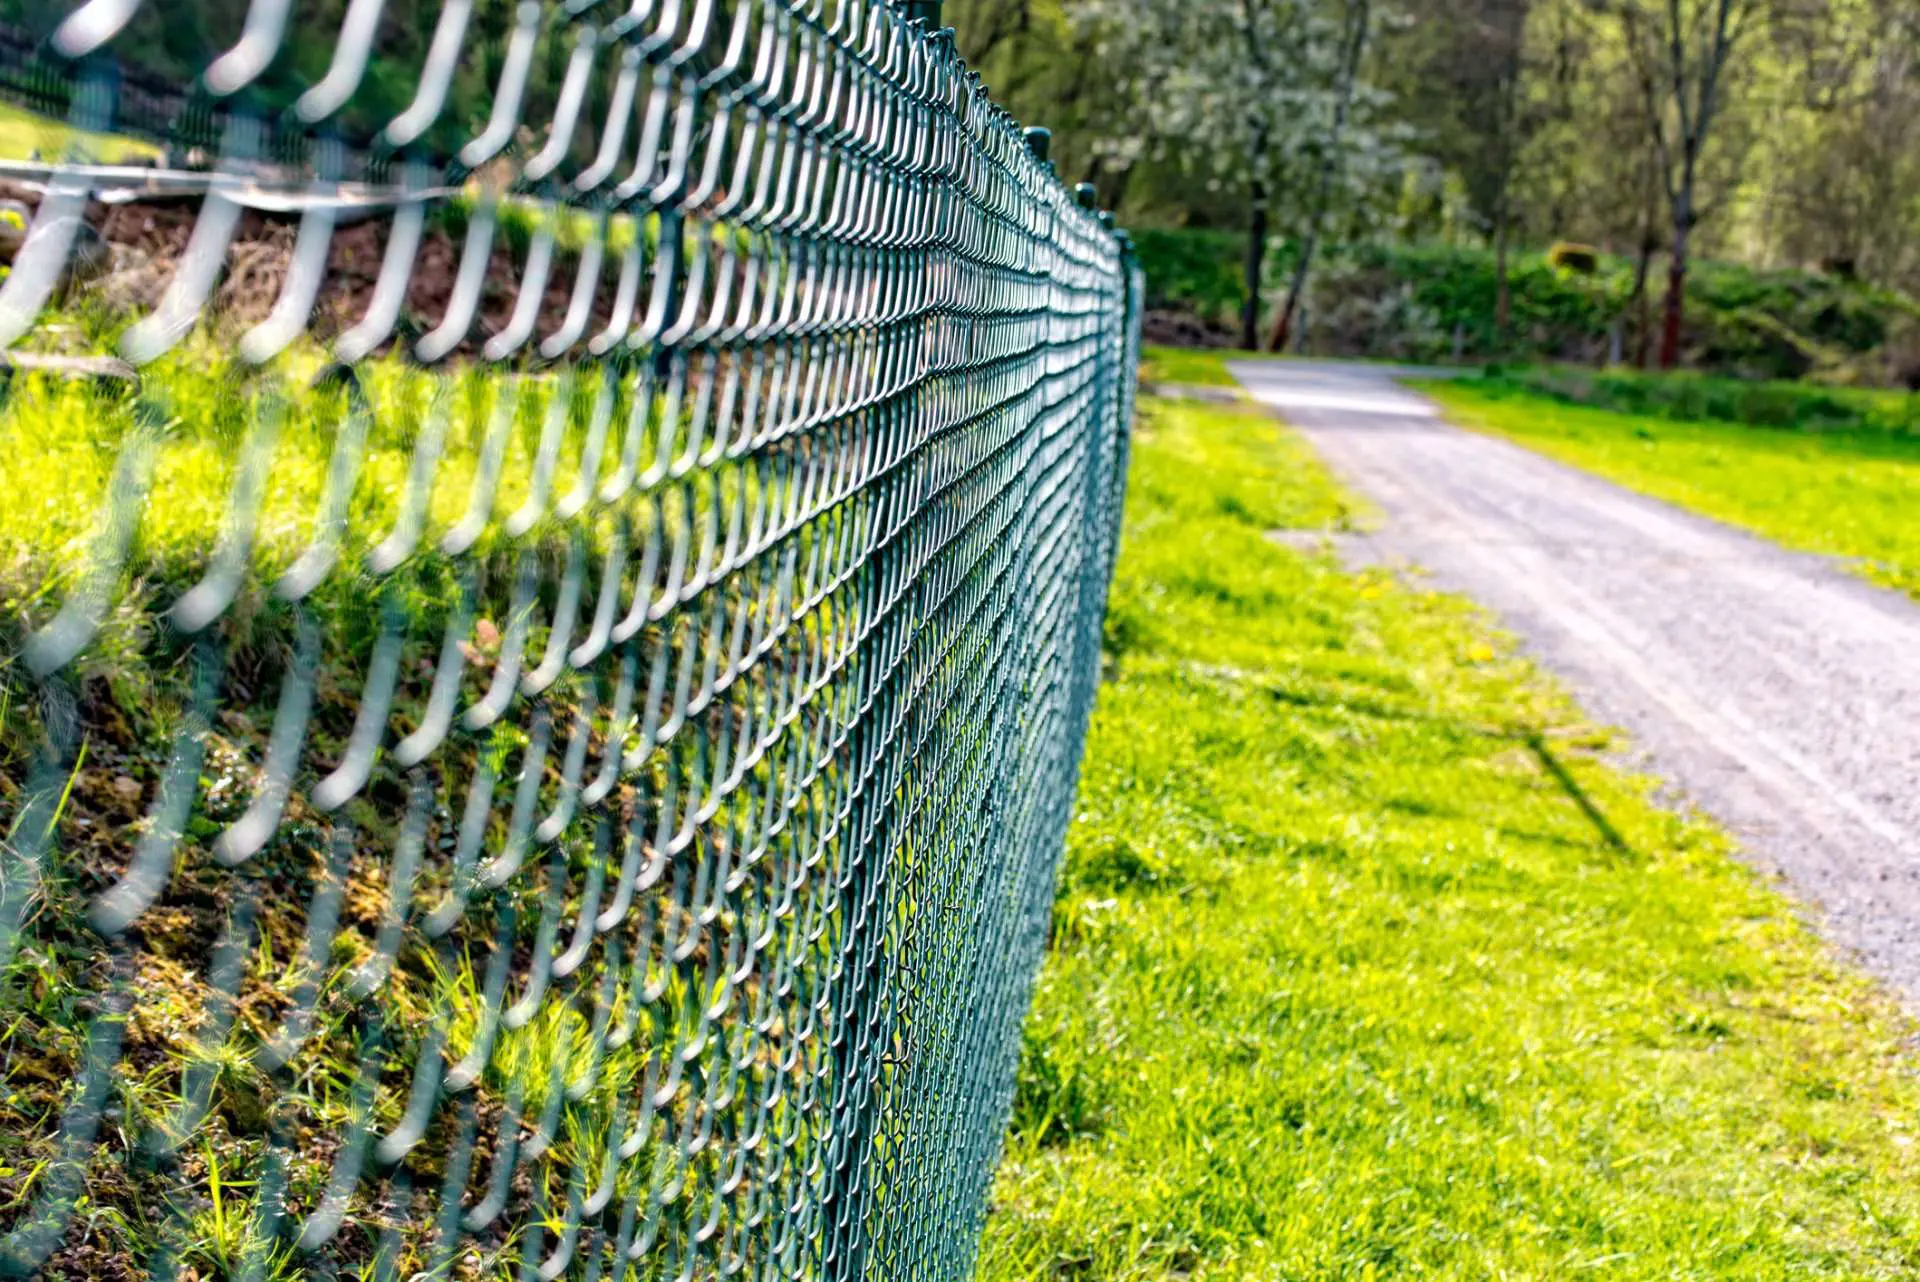 Adron Fence